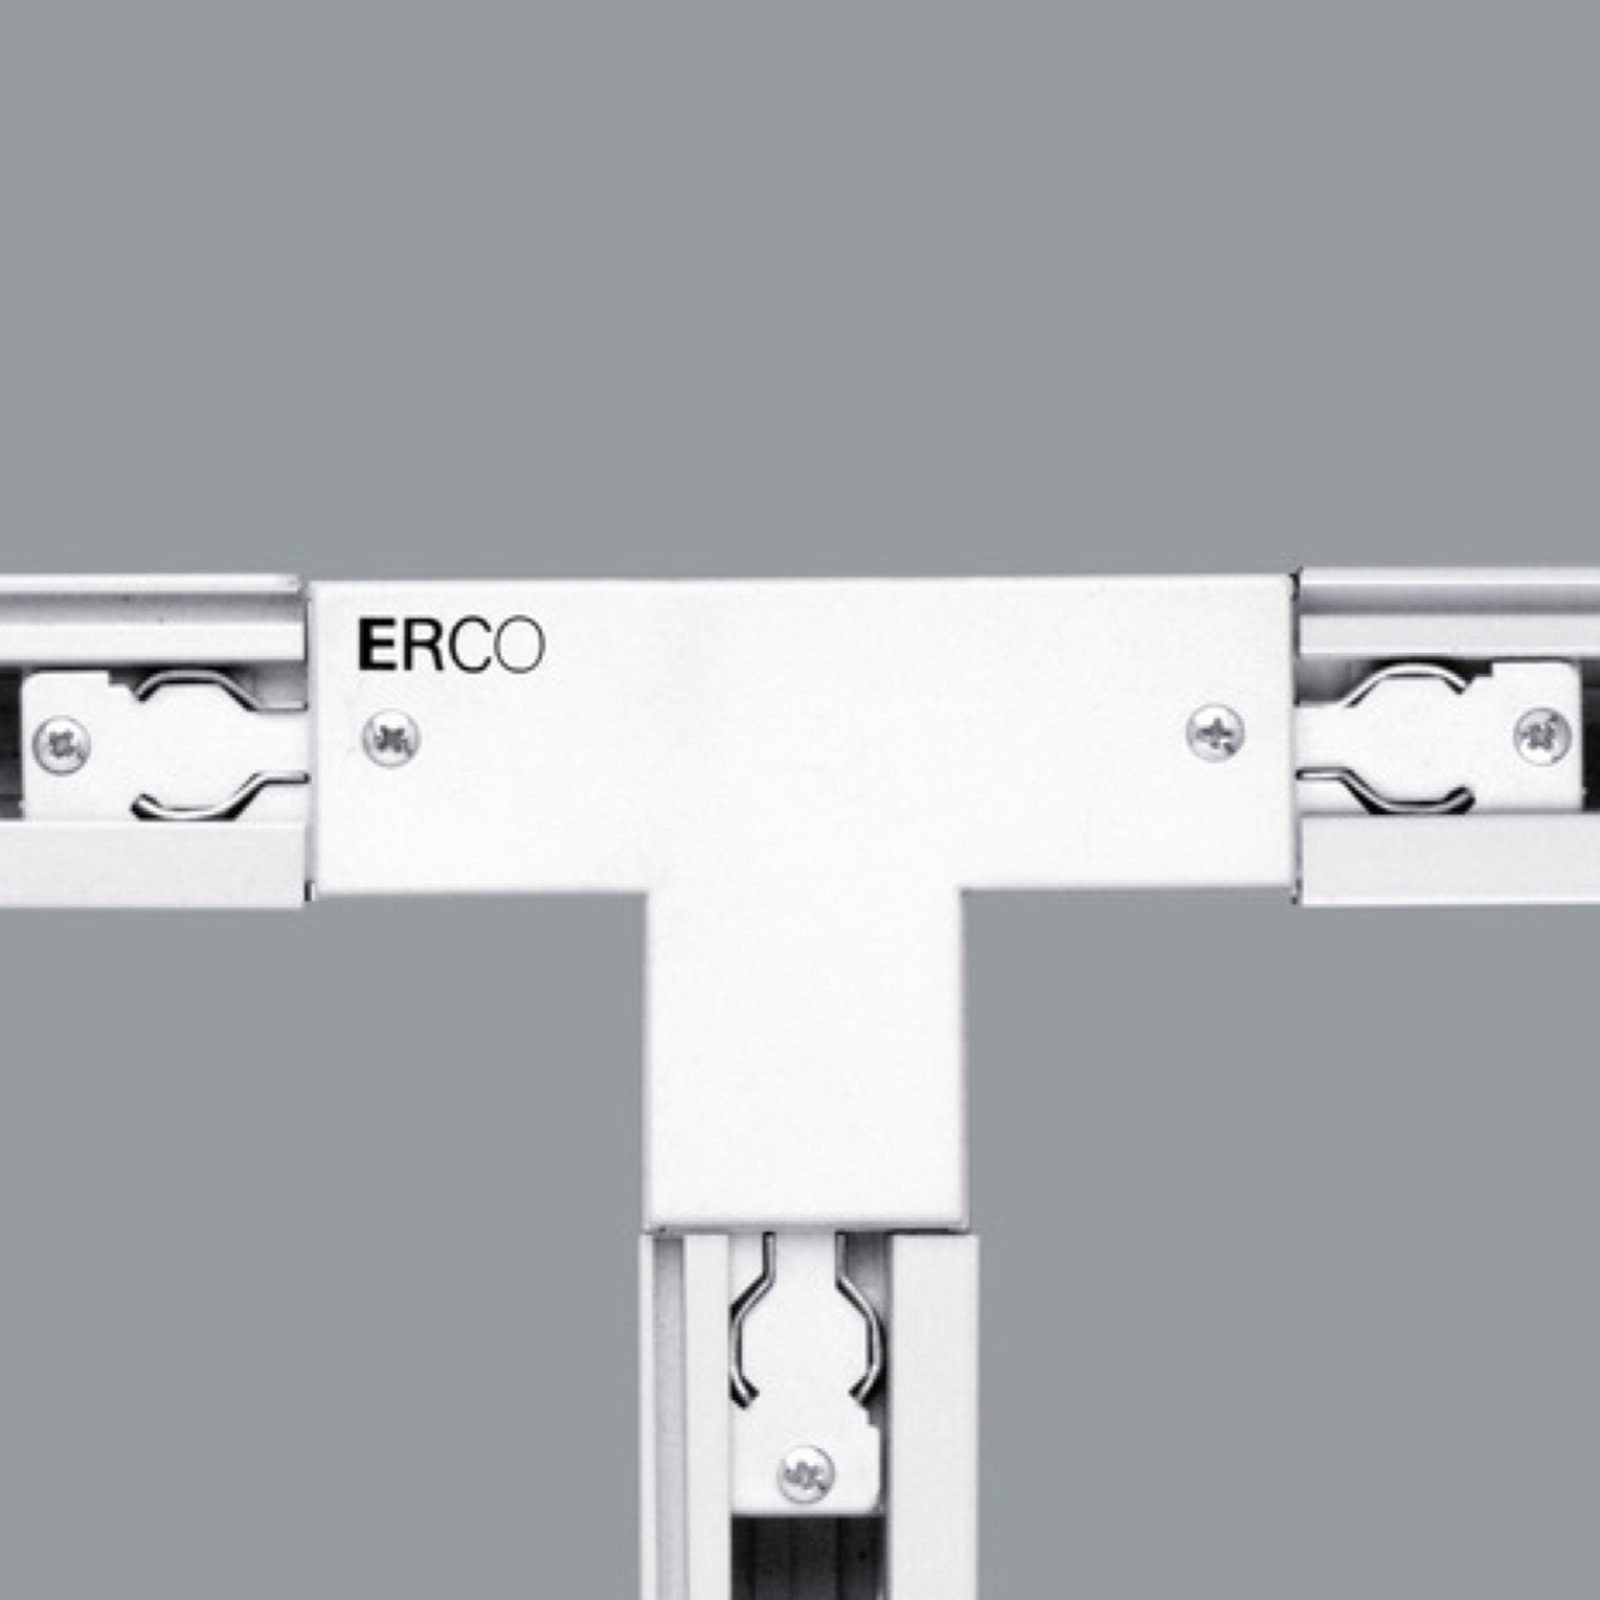 ERCO 3-fase-T-verbinder aardedraad links, wit